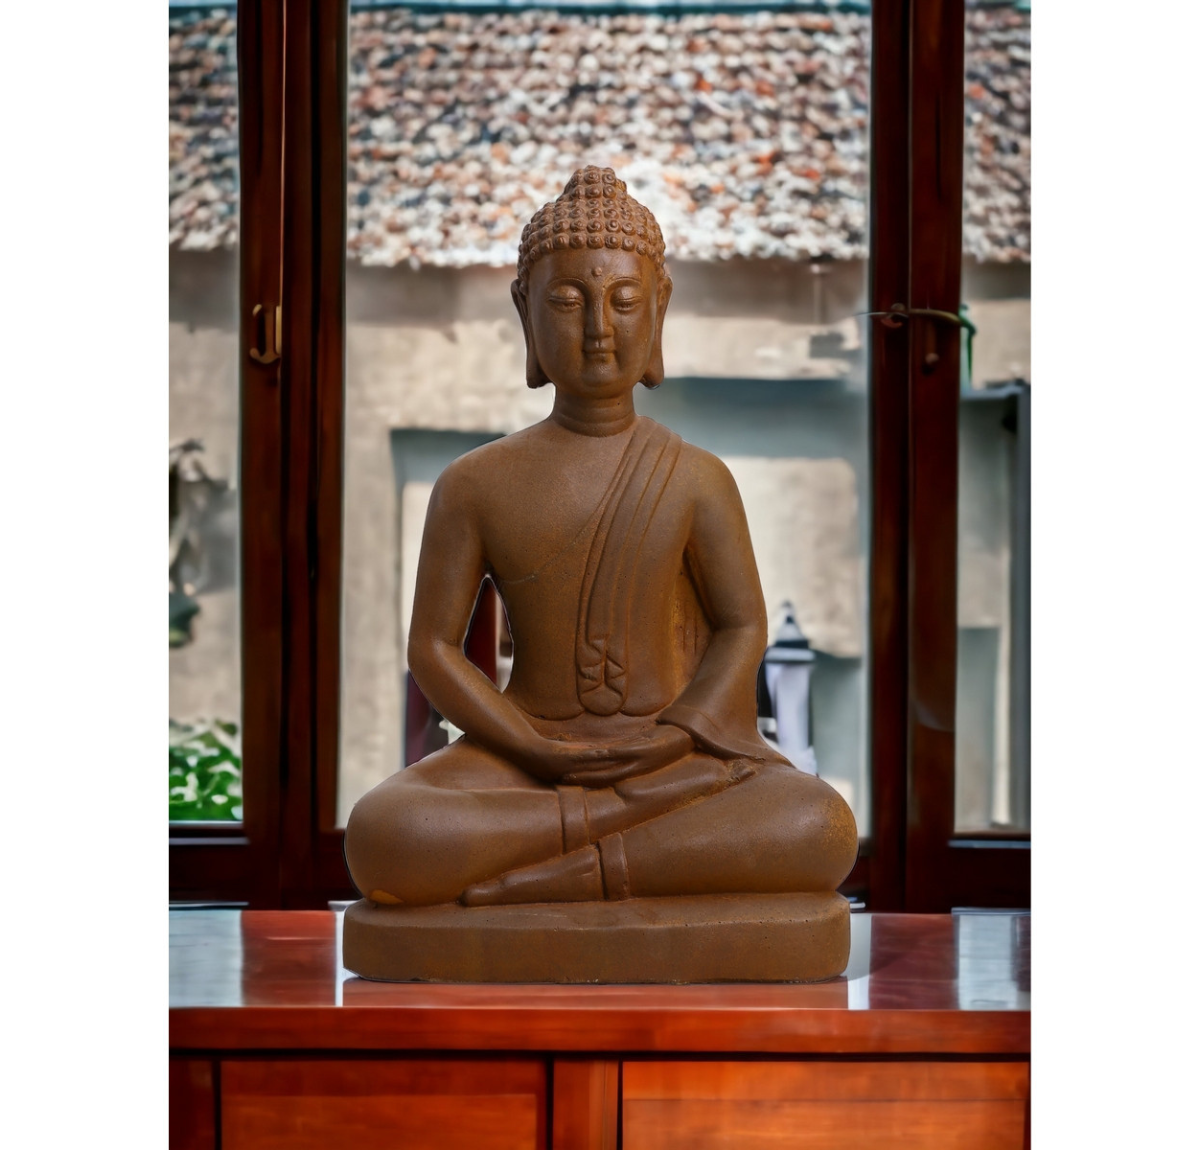 Rusty Sitting Buddha Sculpture - Terracotta